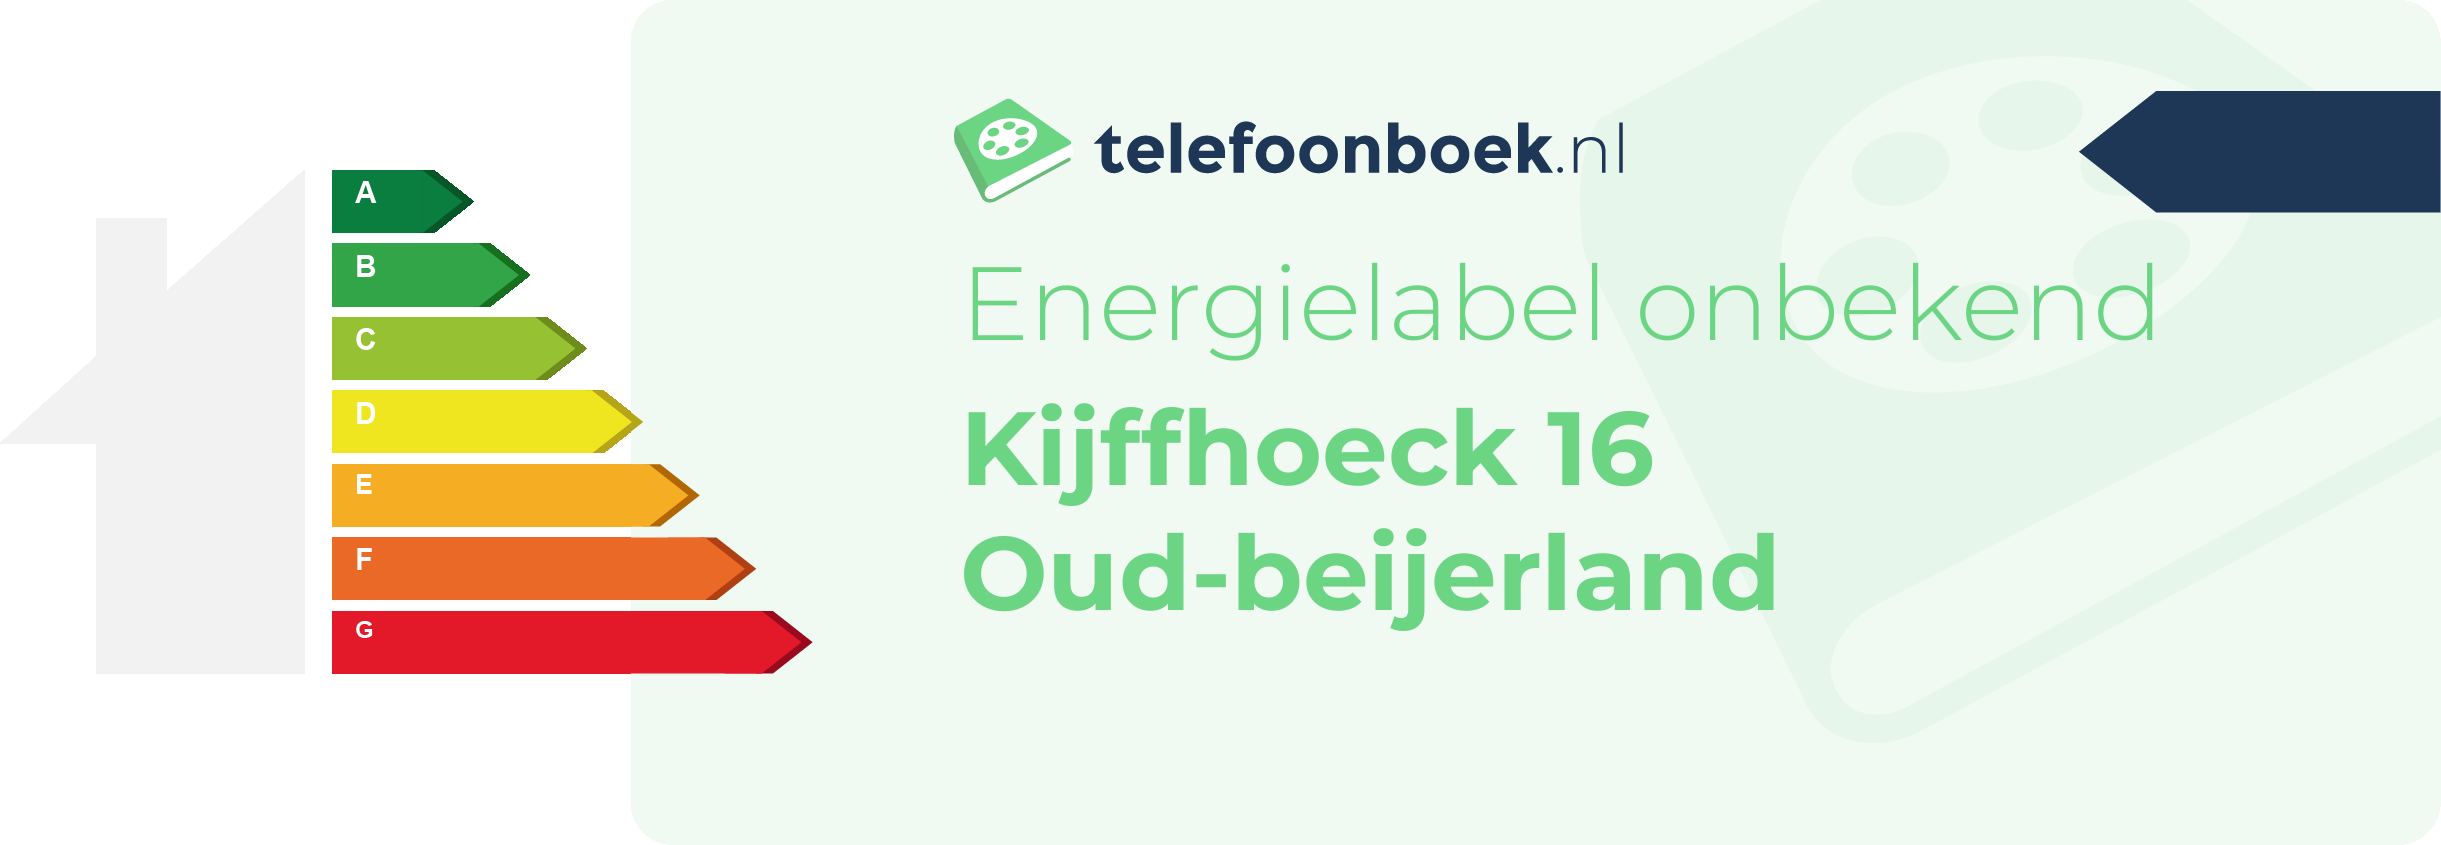 Energielabel Kijffhoeck 16 Oud-Beijerland